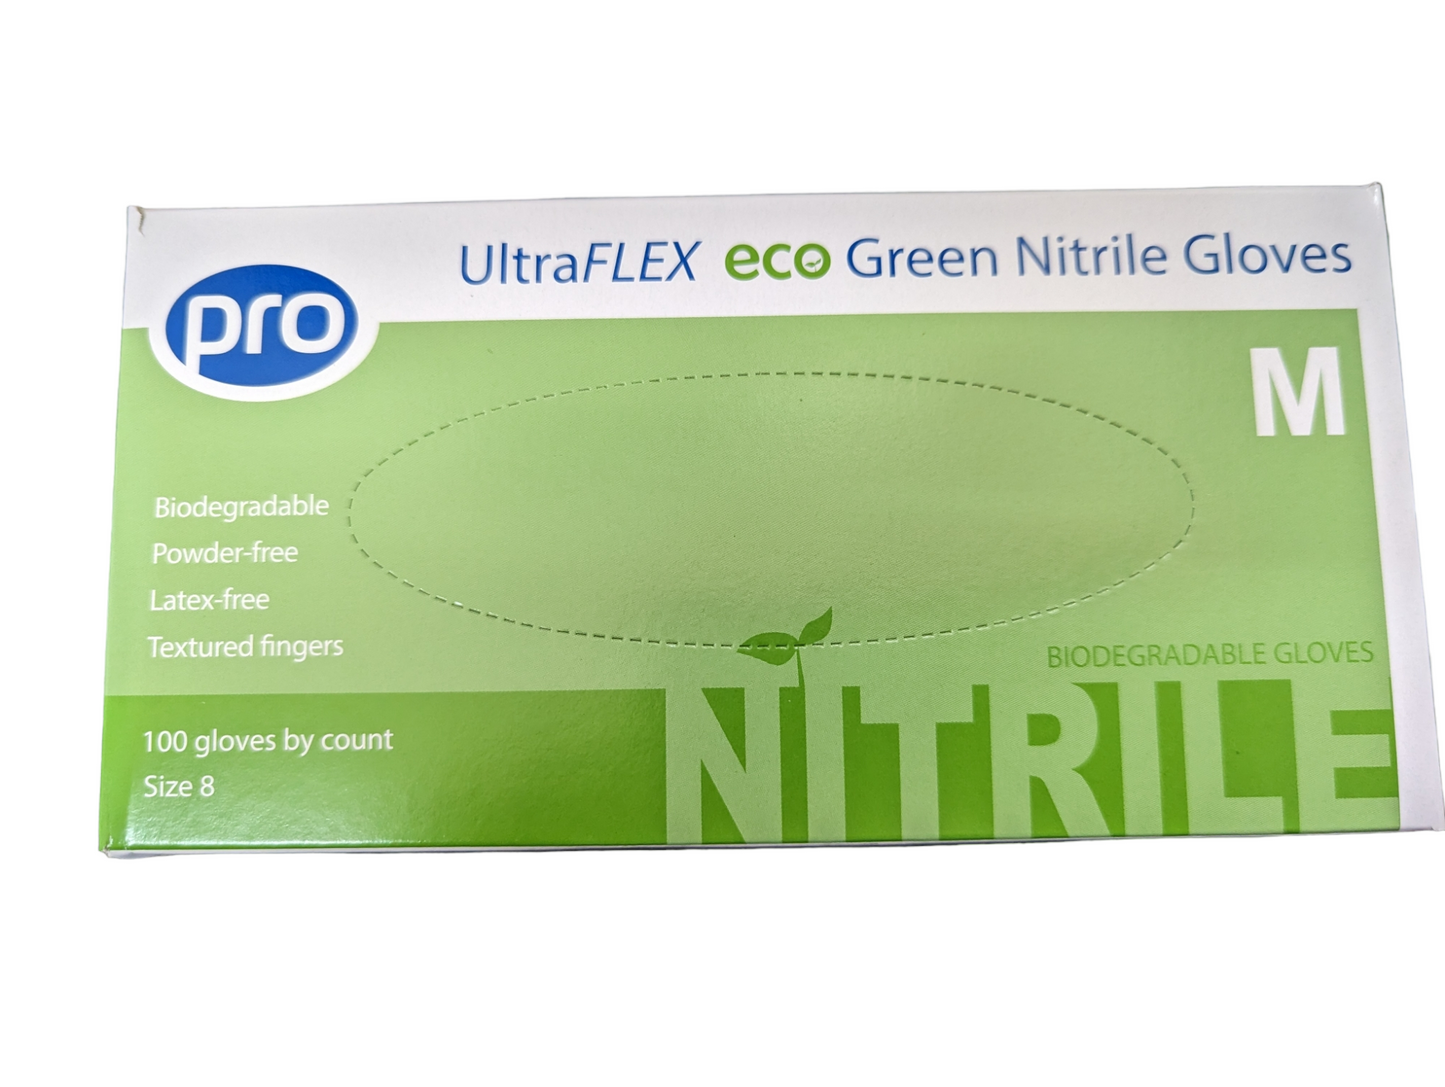 UltraFLEX eco green nitrile gloves